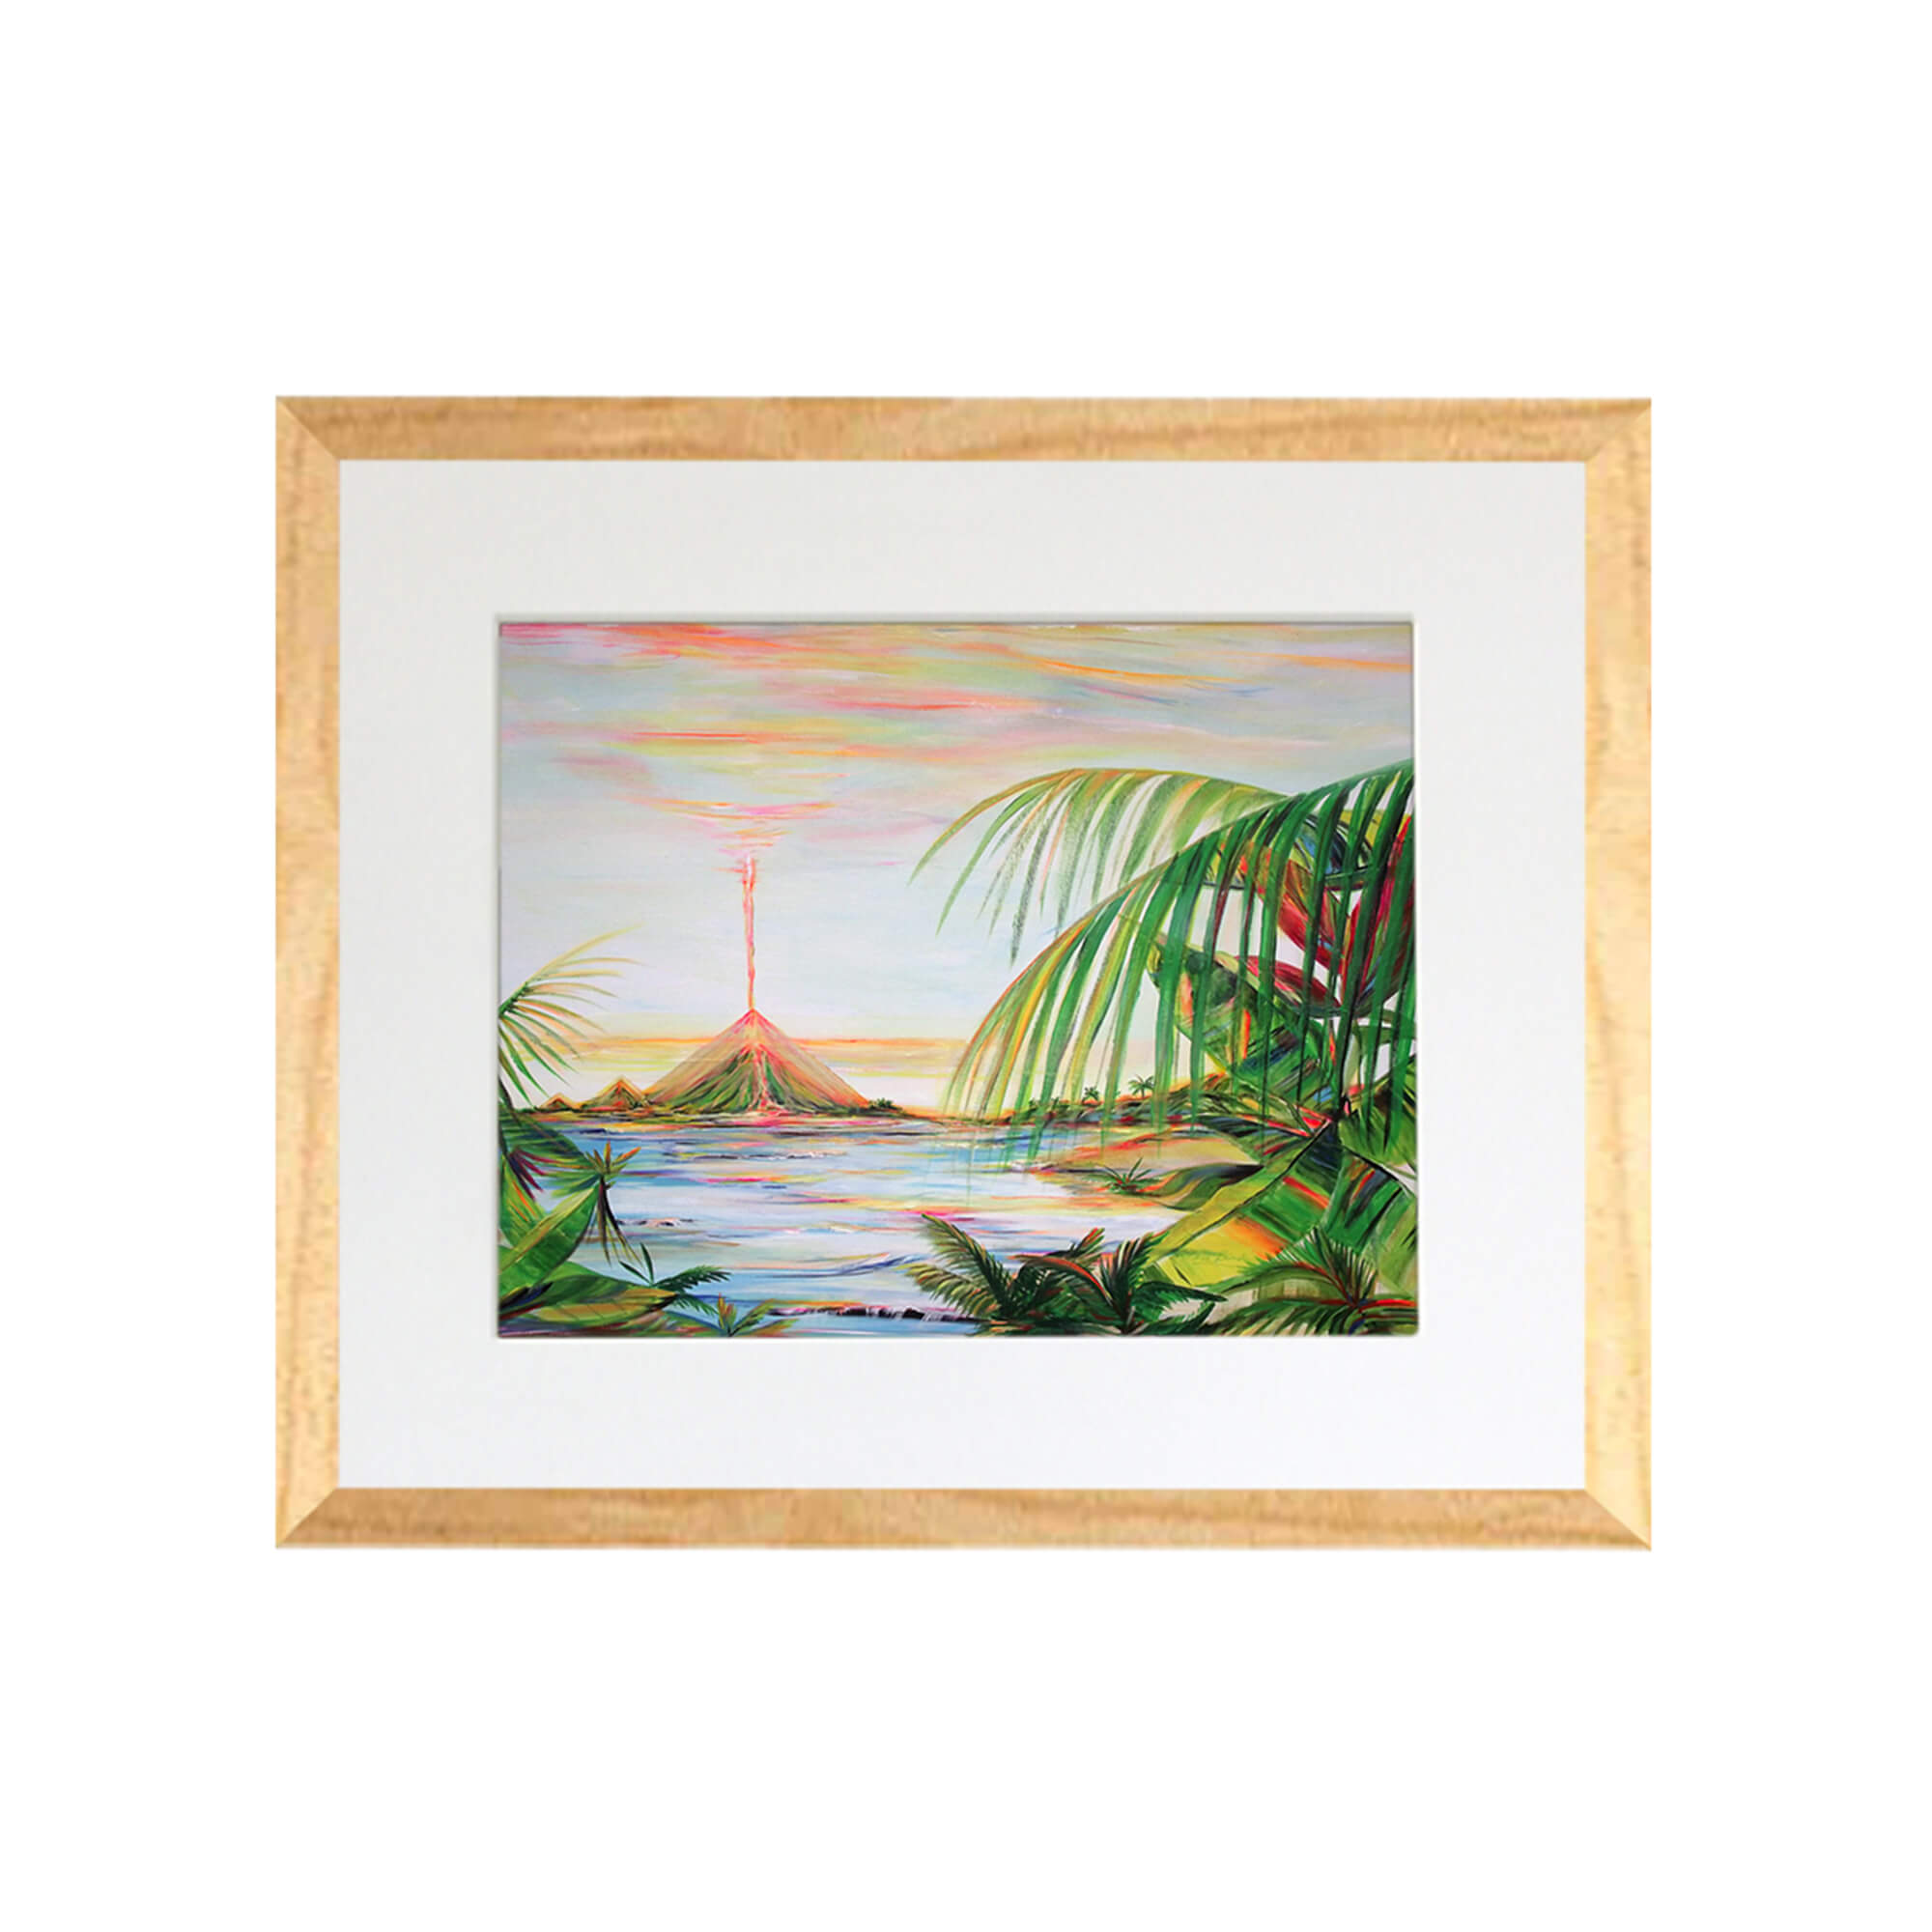 A landscape framed by tropical plants by Hawaii artist Jess Burda